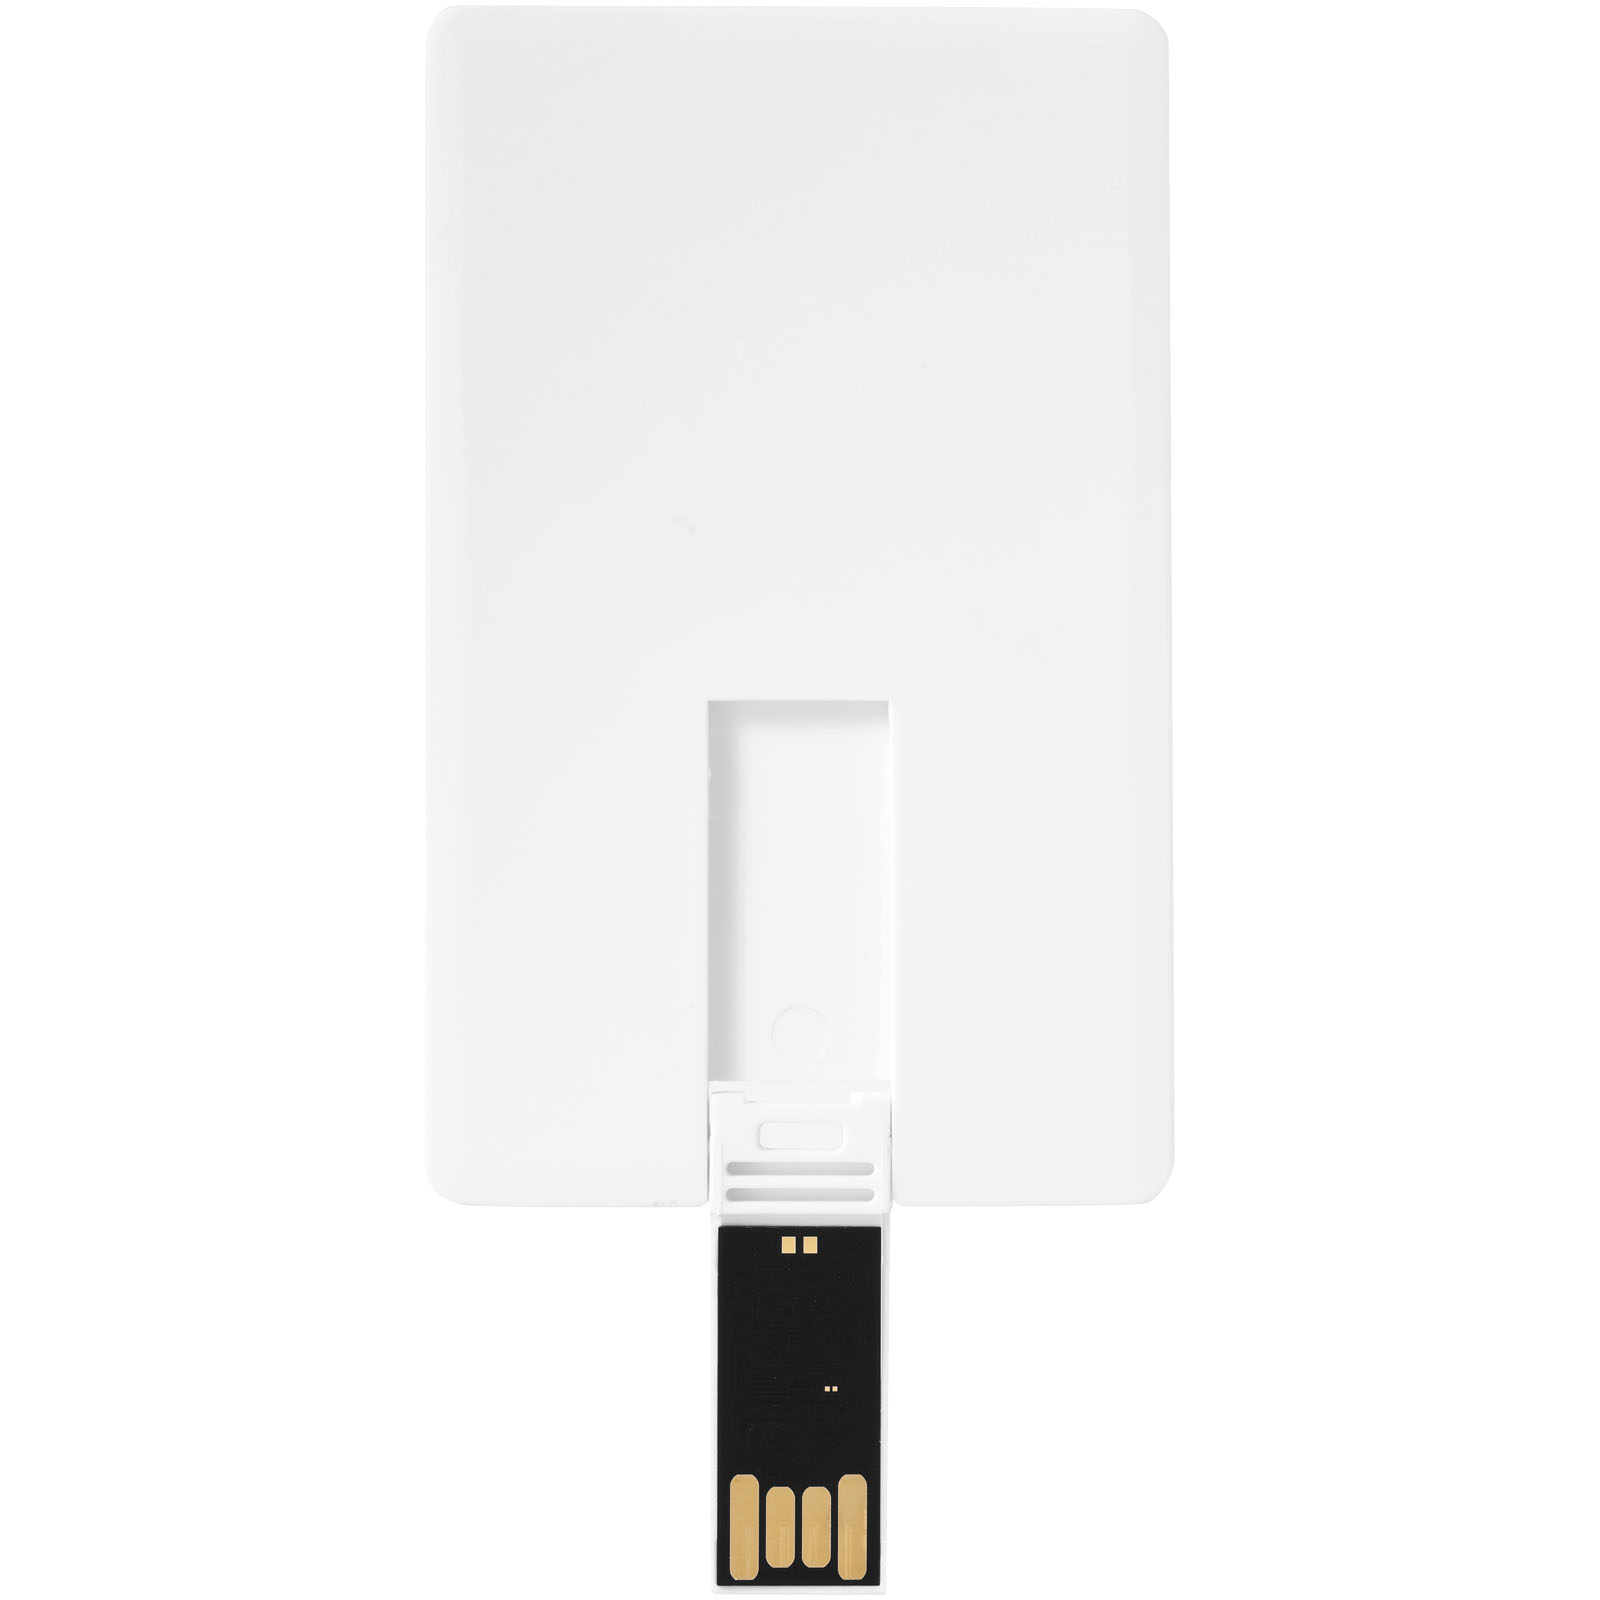 Advertising USB Flash Drives - Slim card-shaped 2GB USB flash drive - 2